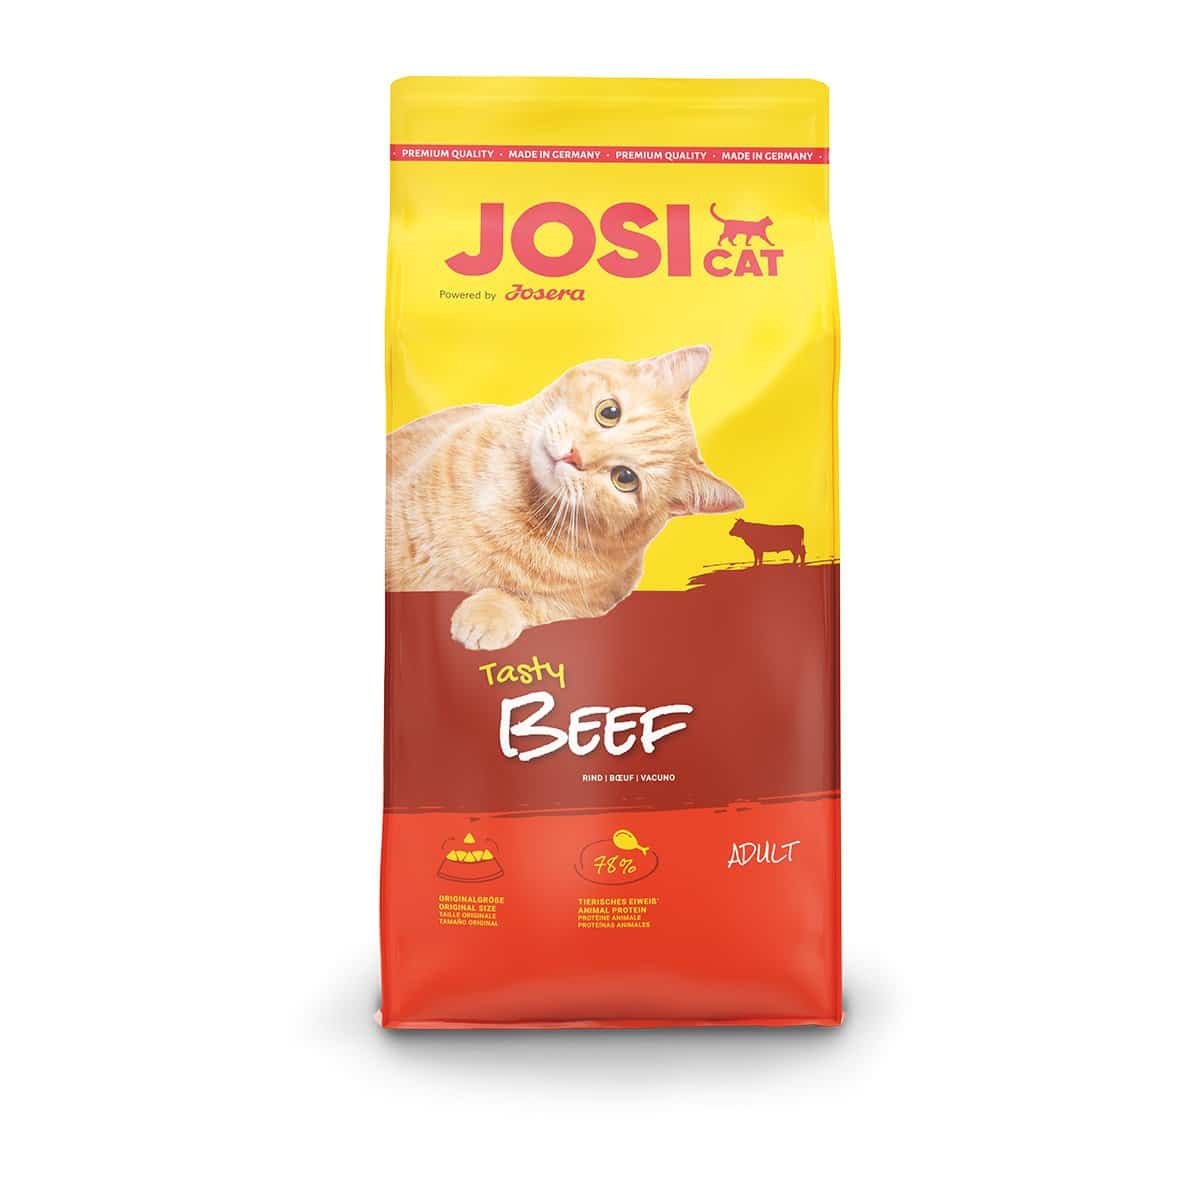 JosiCat Tasty Beef 650g